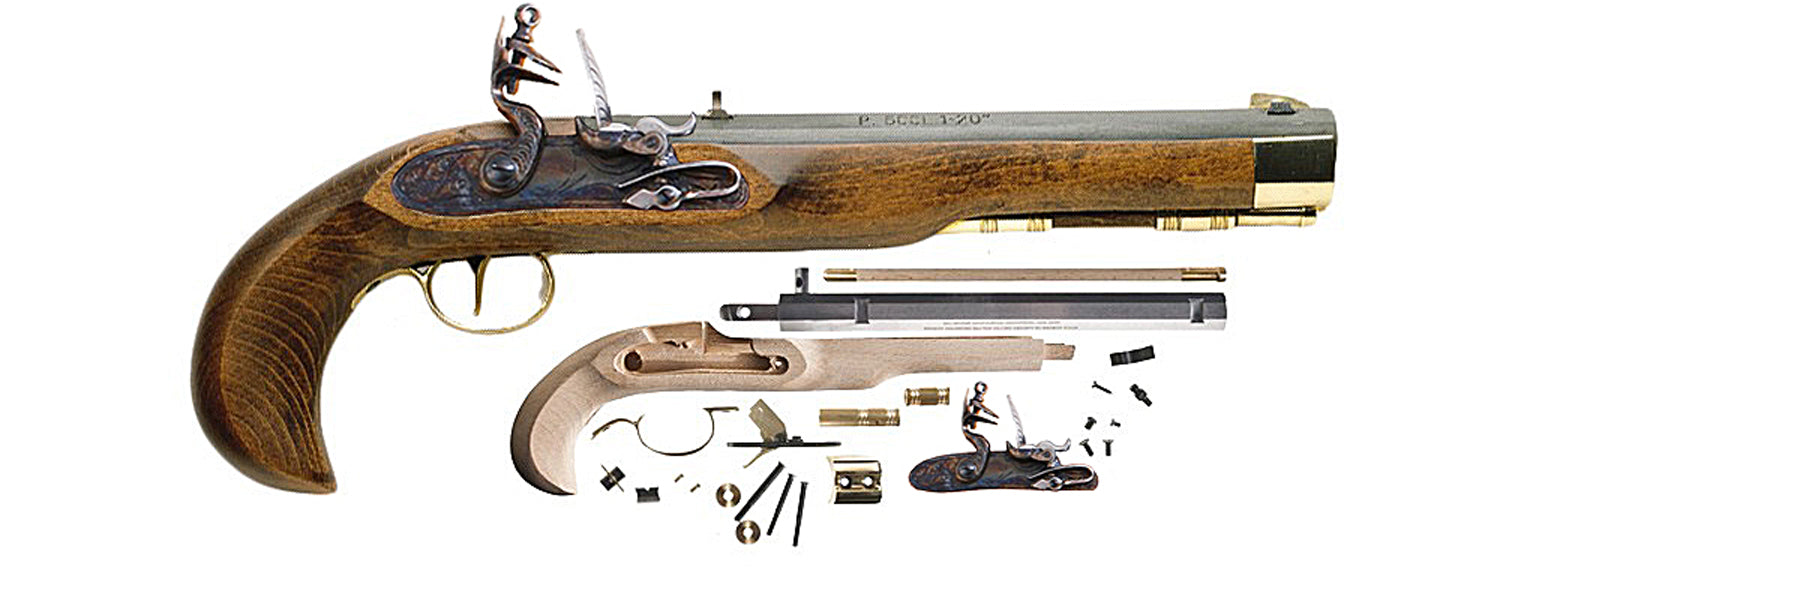 Traditions™ Flintlock Kentucky Pistol Kit - .50 Caliber - KP5050